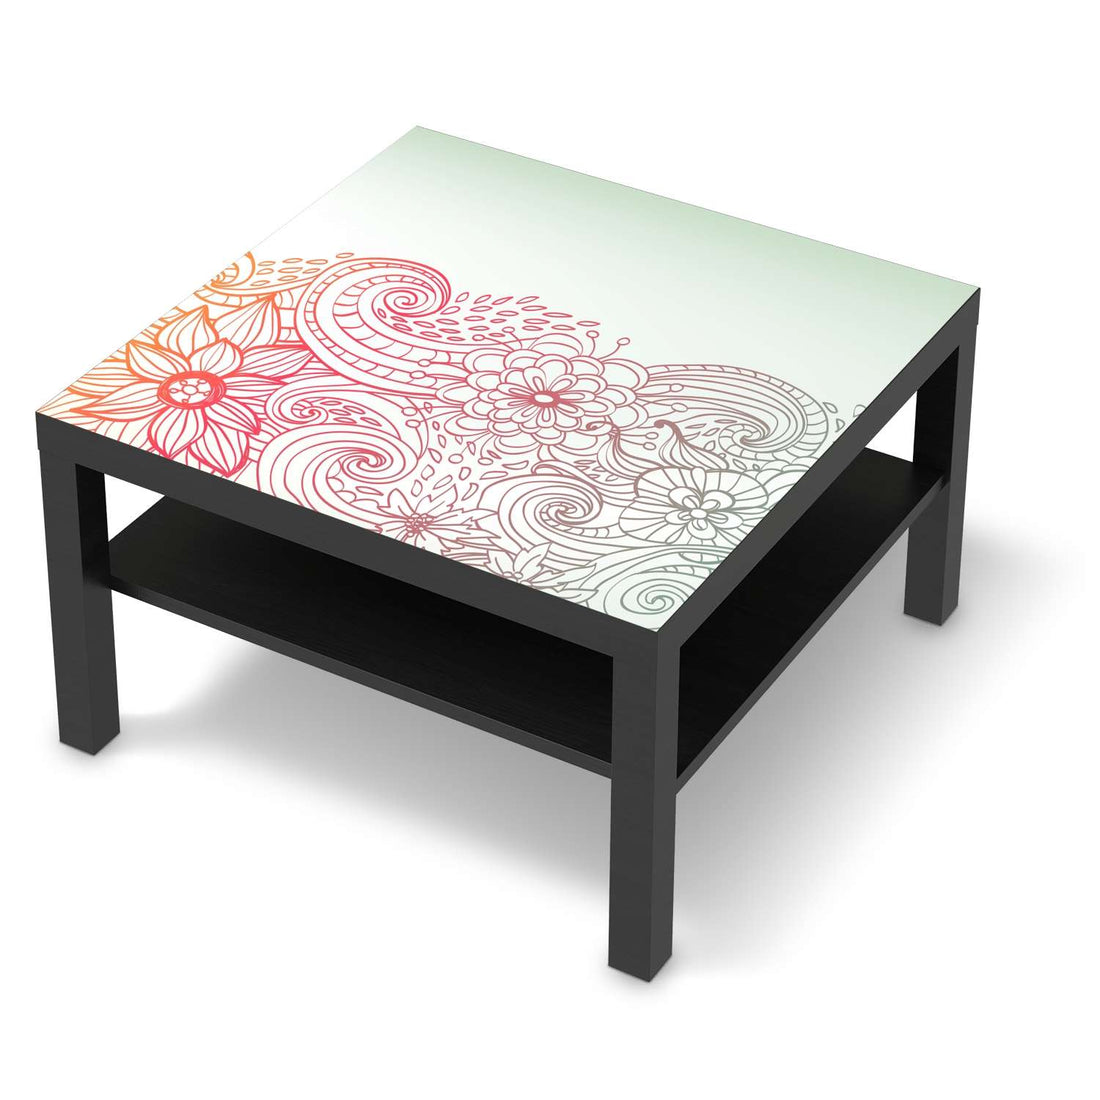 Selbstklebende Folie Floral Doodle - IKEA Lack Tisch 78x78 cm - schwarz